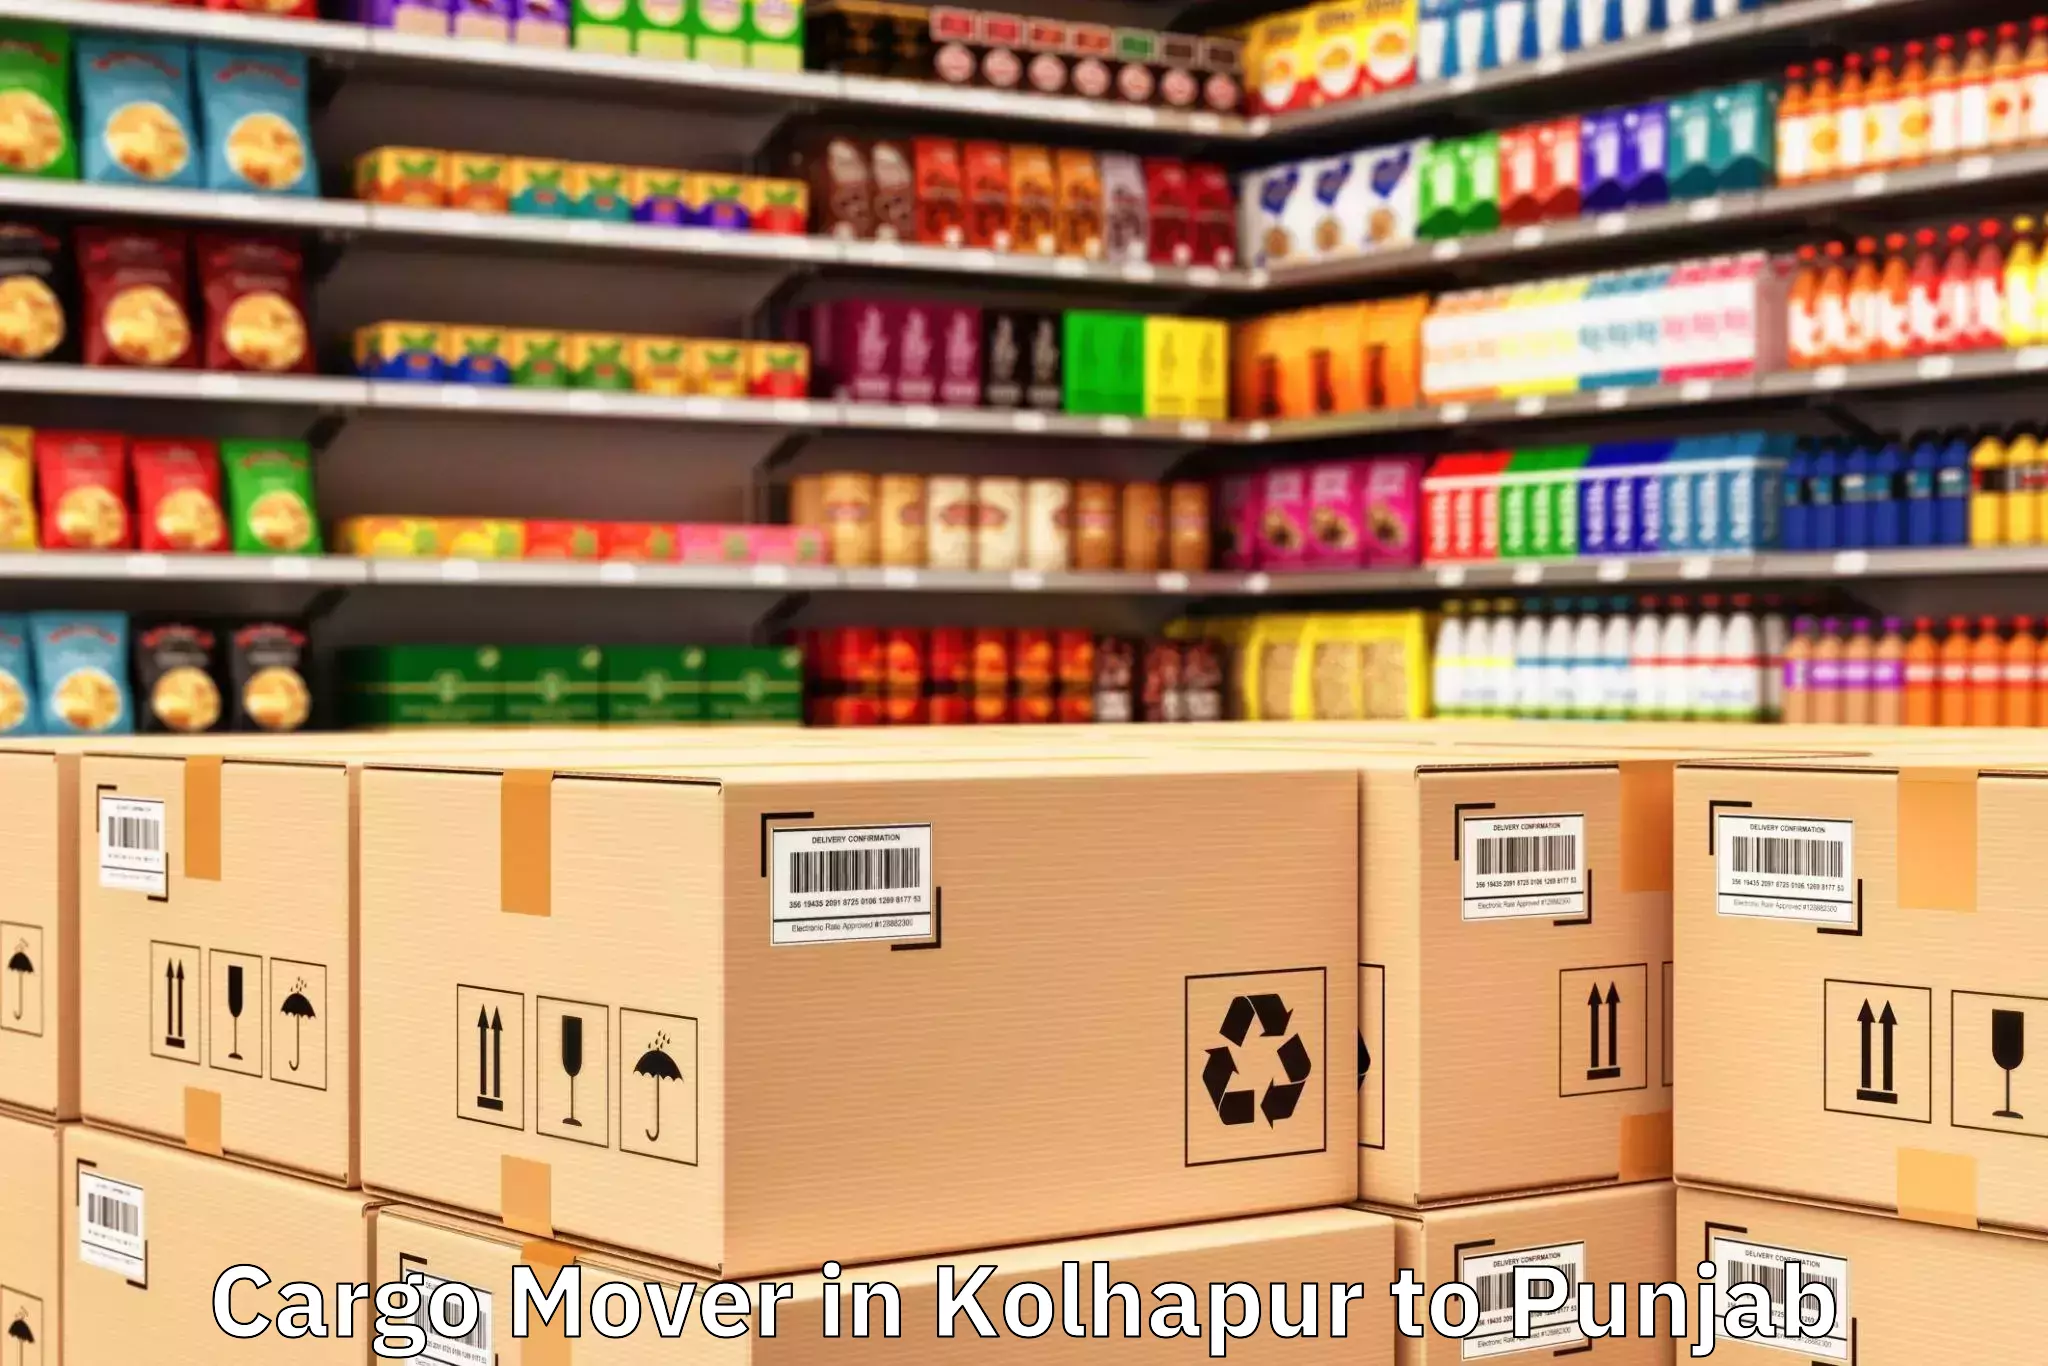 Easy Kolhapur to Punjab Cargo Mover Booking